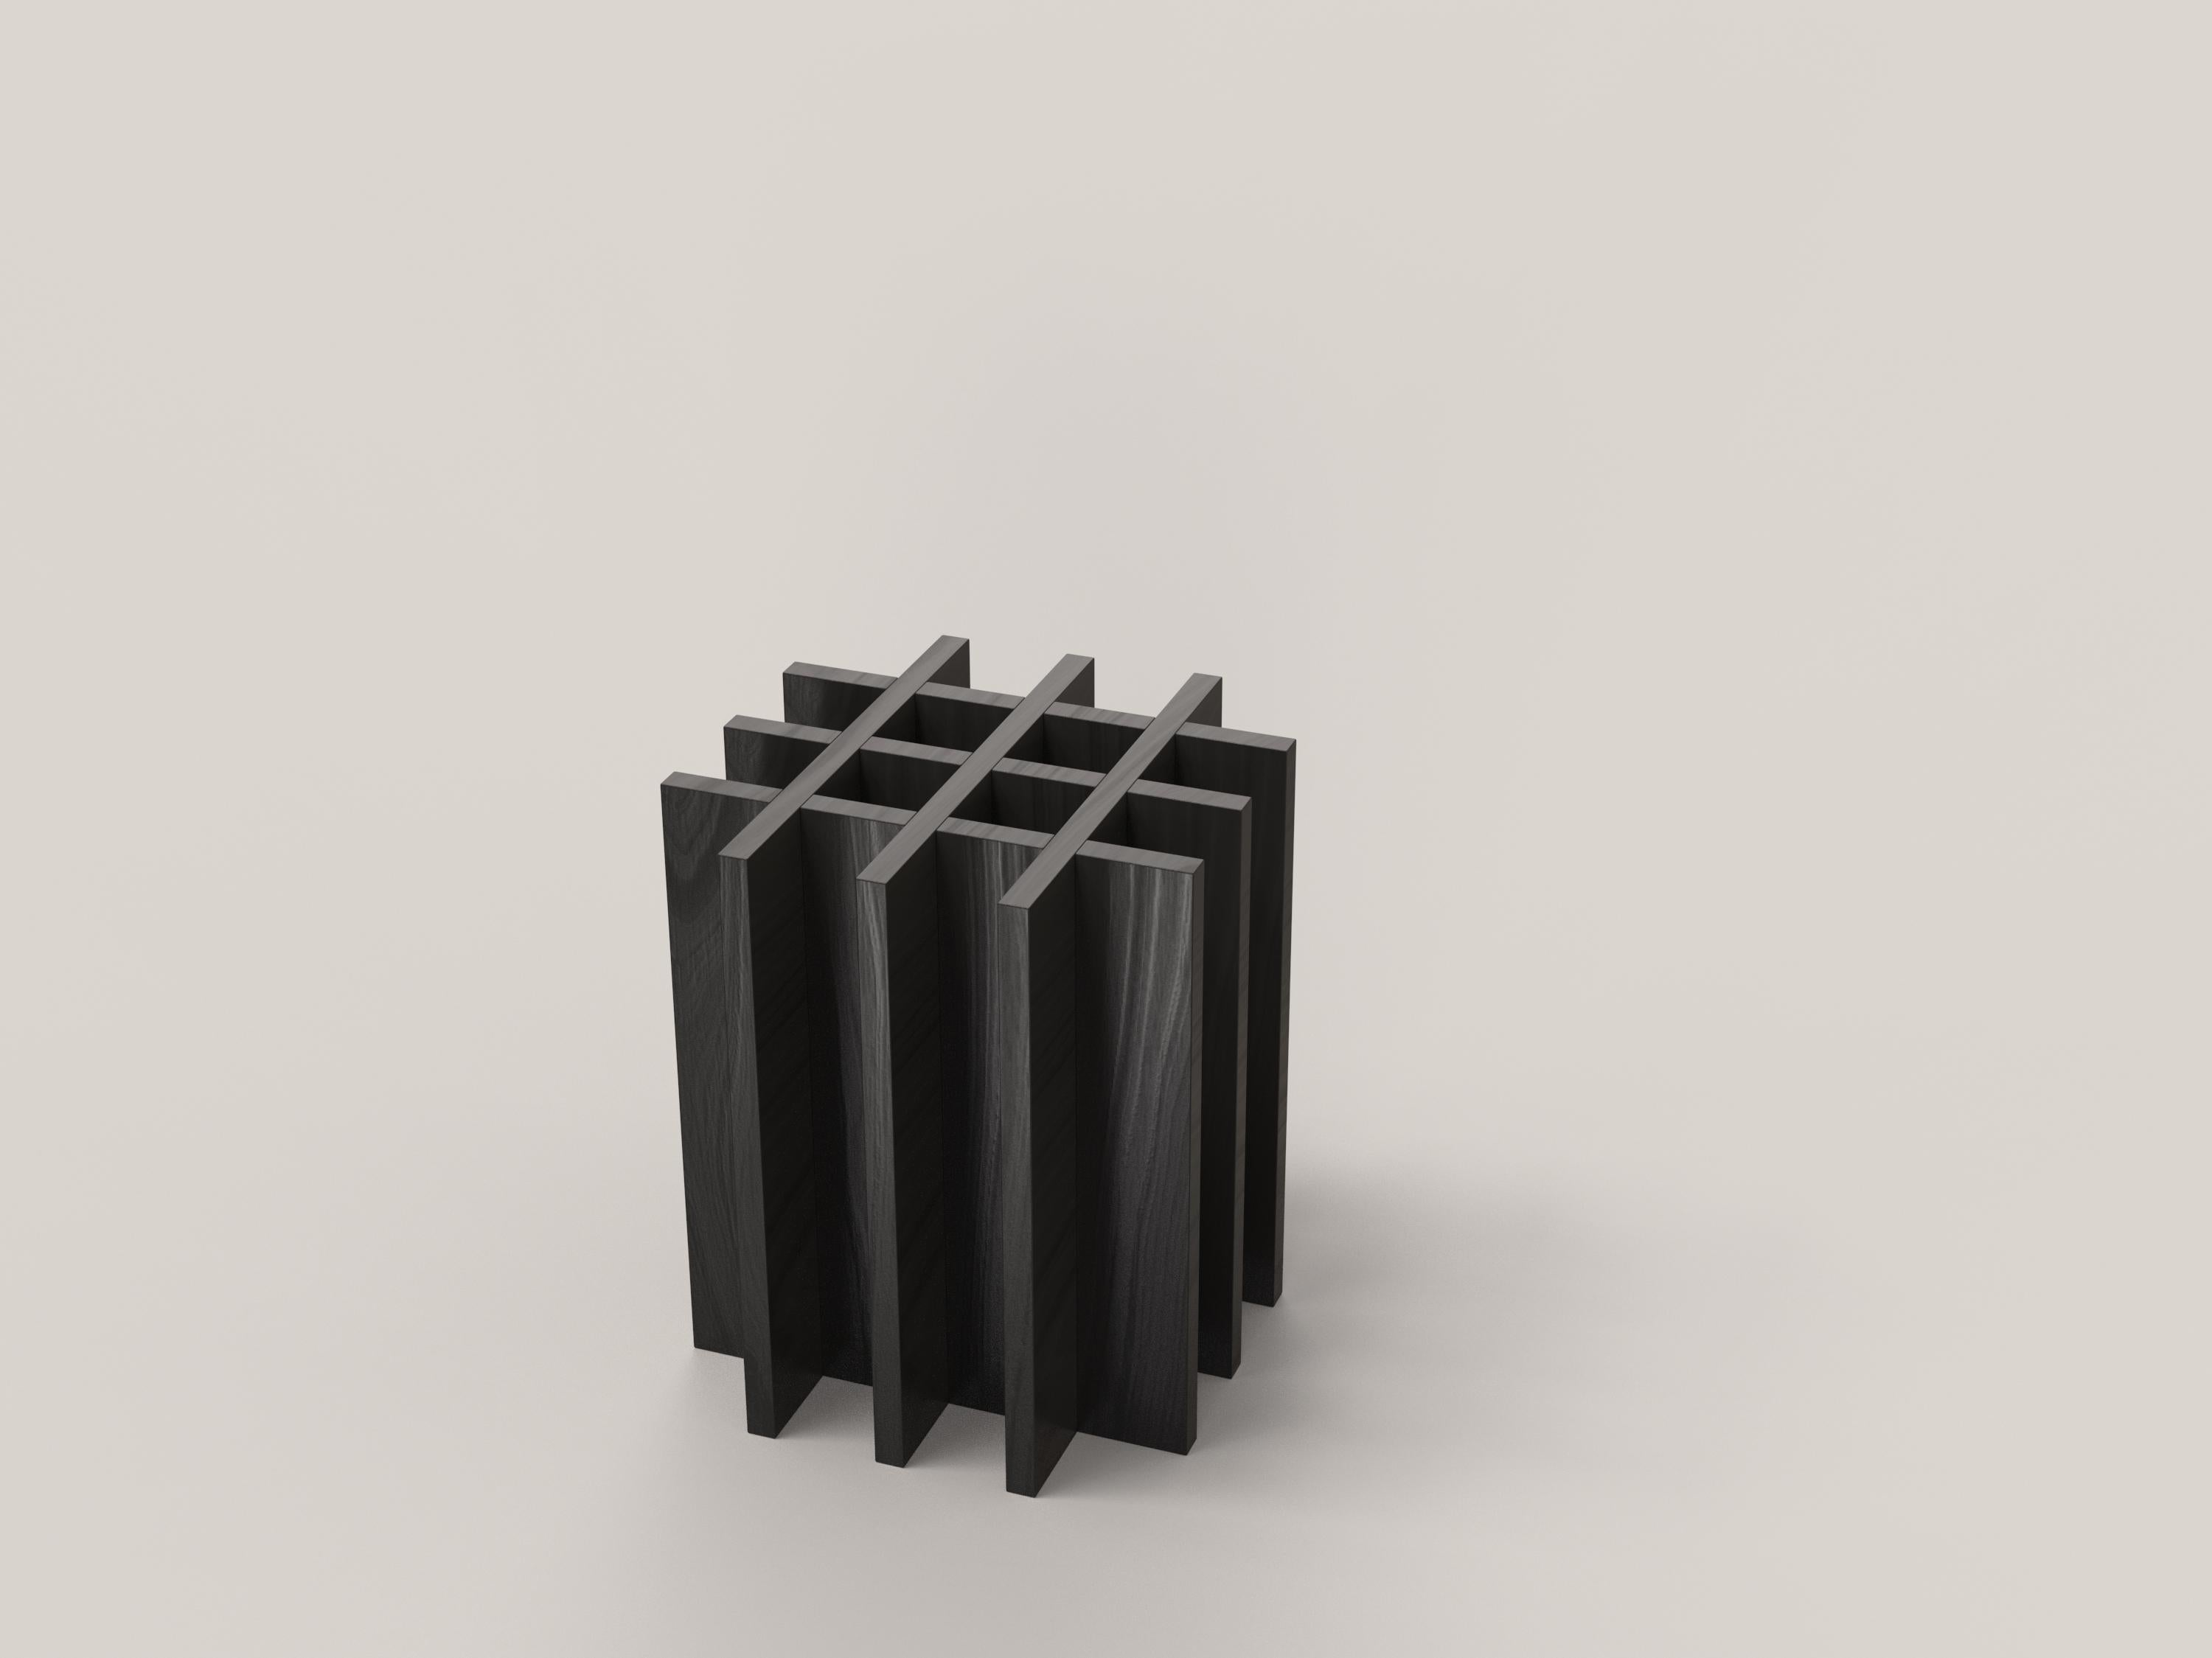 Italian Contemporary Limited Edition Black Wood Stool, Arca V1 by Edizione Limitata For Sale